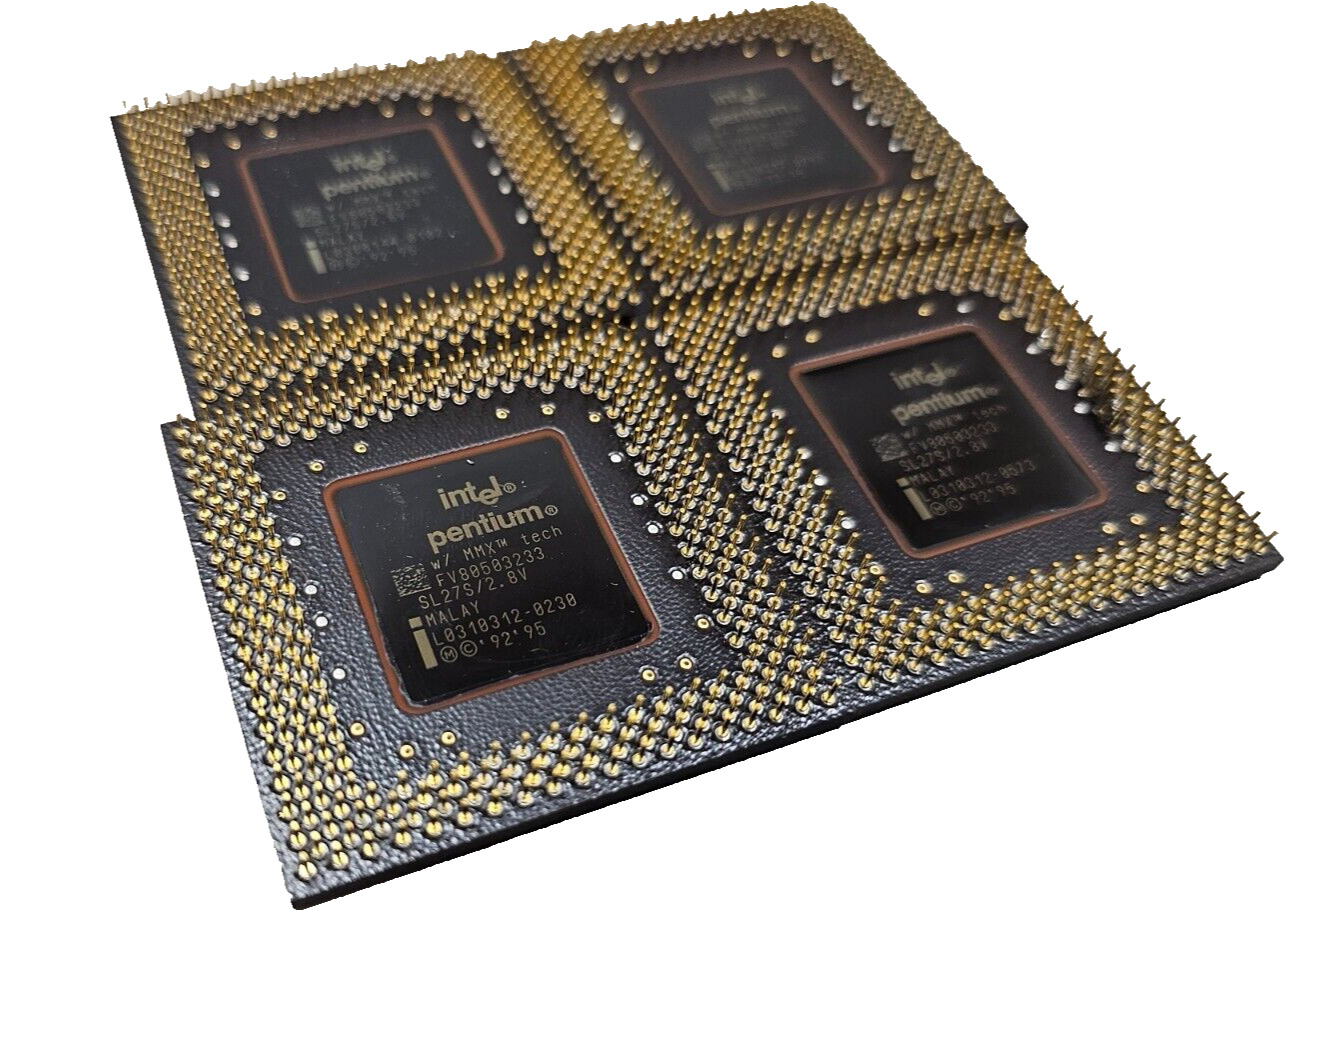 Qty 4 Vtg Intel Pentium 233Mhz MMX FV80503-233 CPU Processor SL27S Vintage Gold